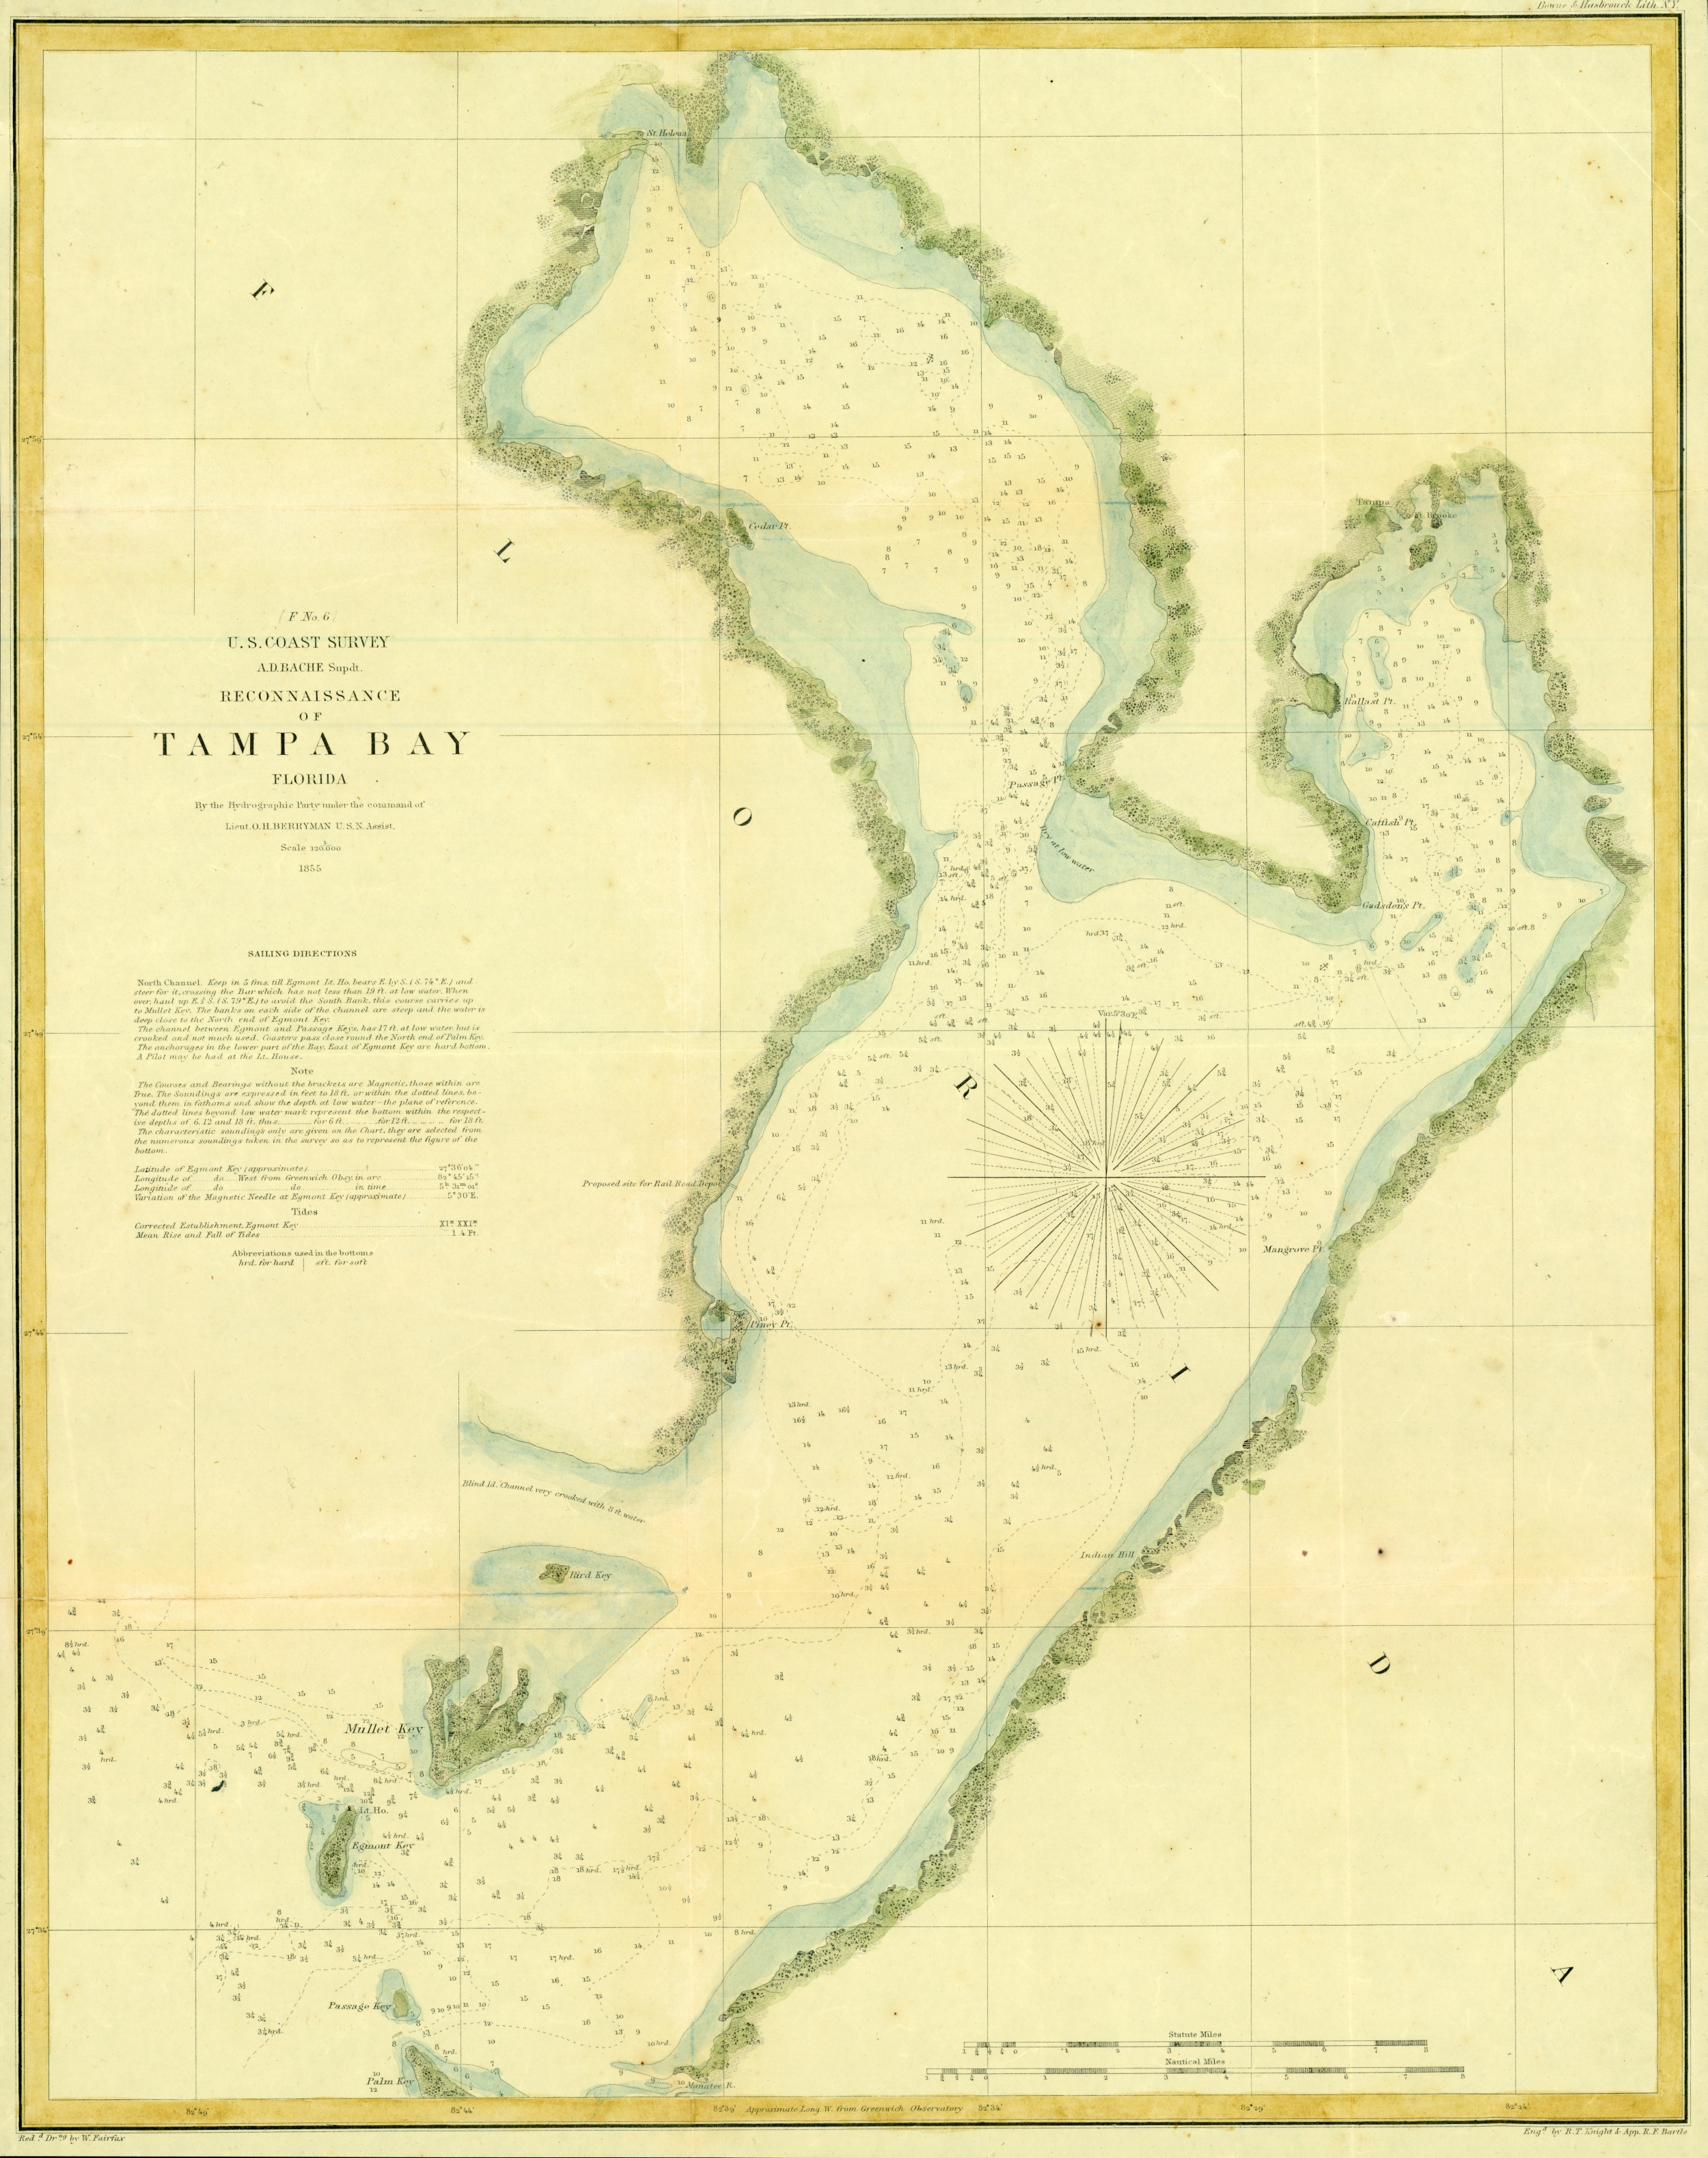 U.S. Coast Survey, Tampa Bay Nautical Chart, 1855